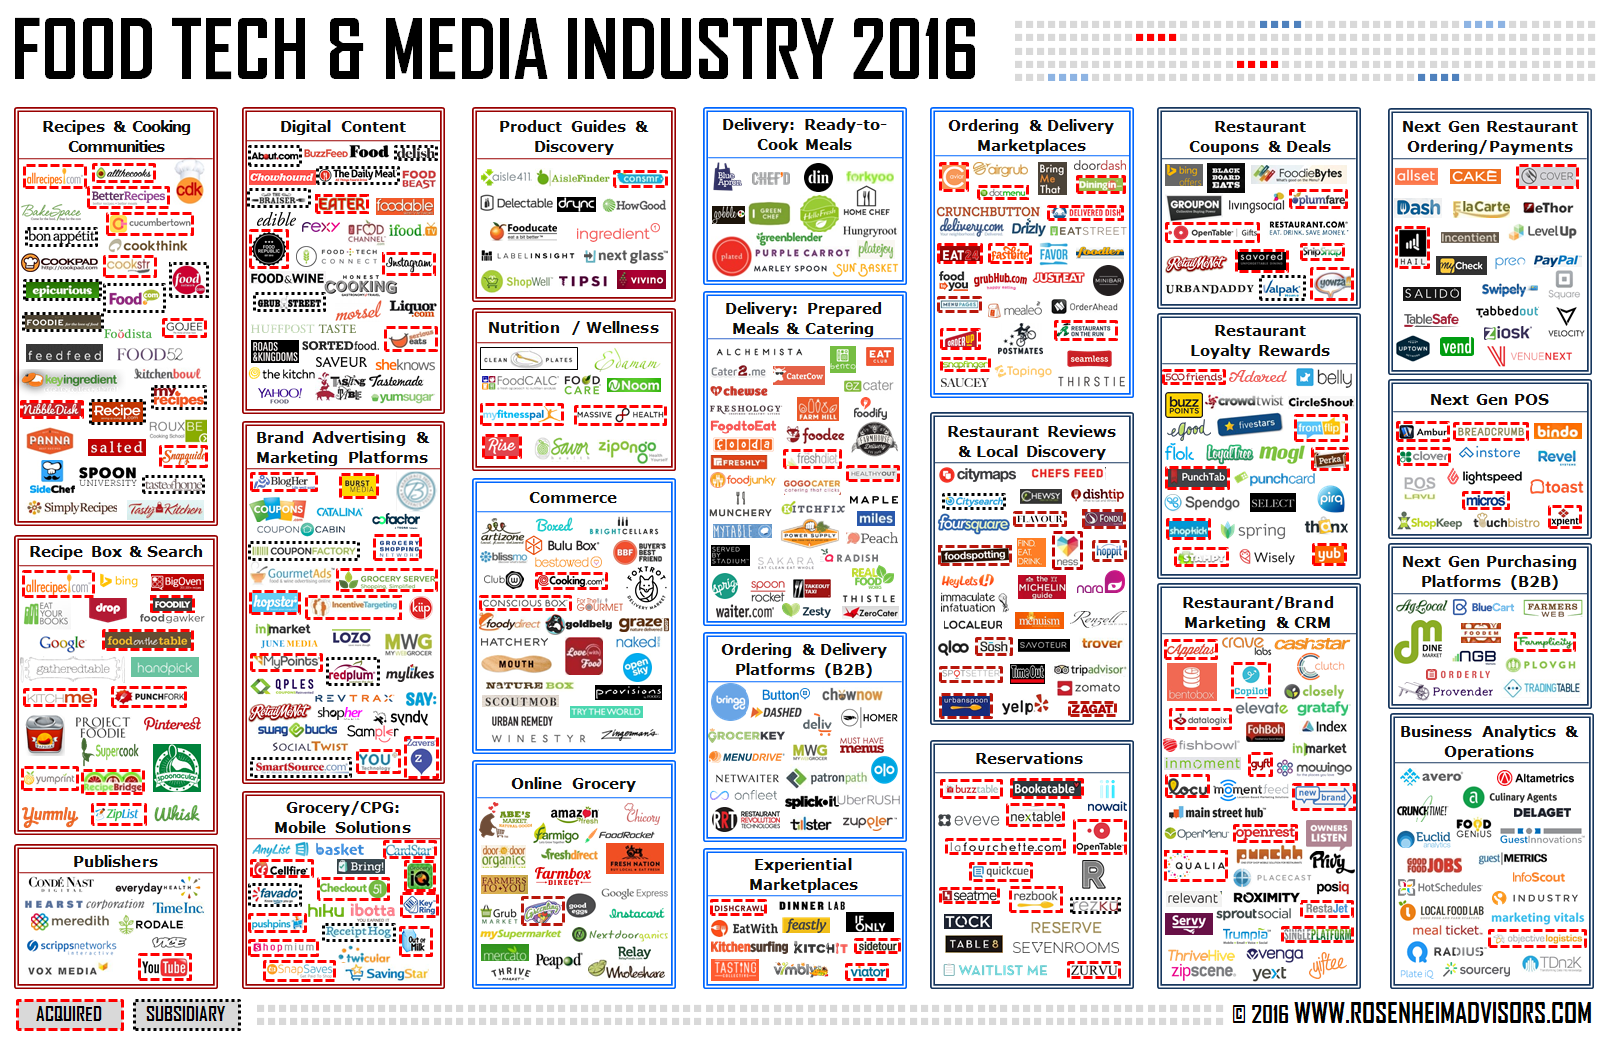 Food Tech & Media Industry 2016